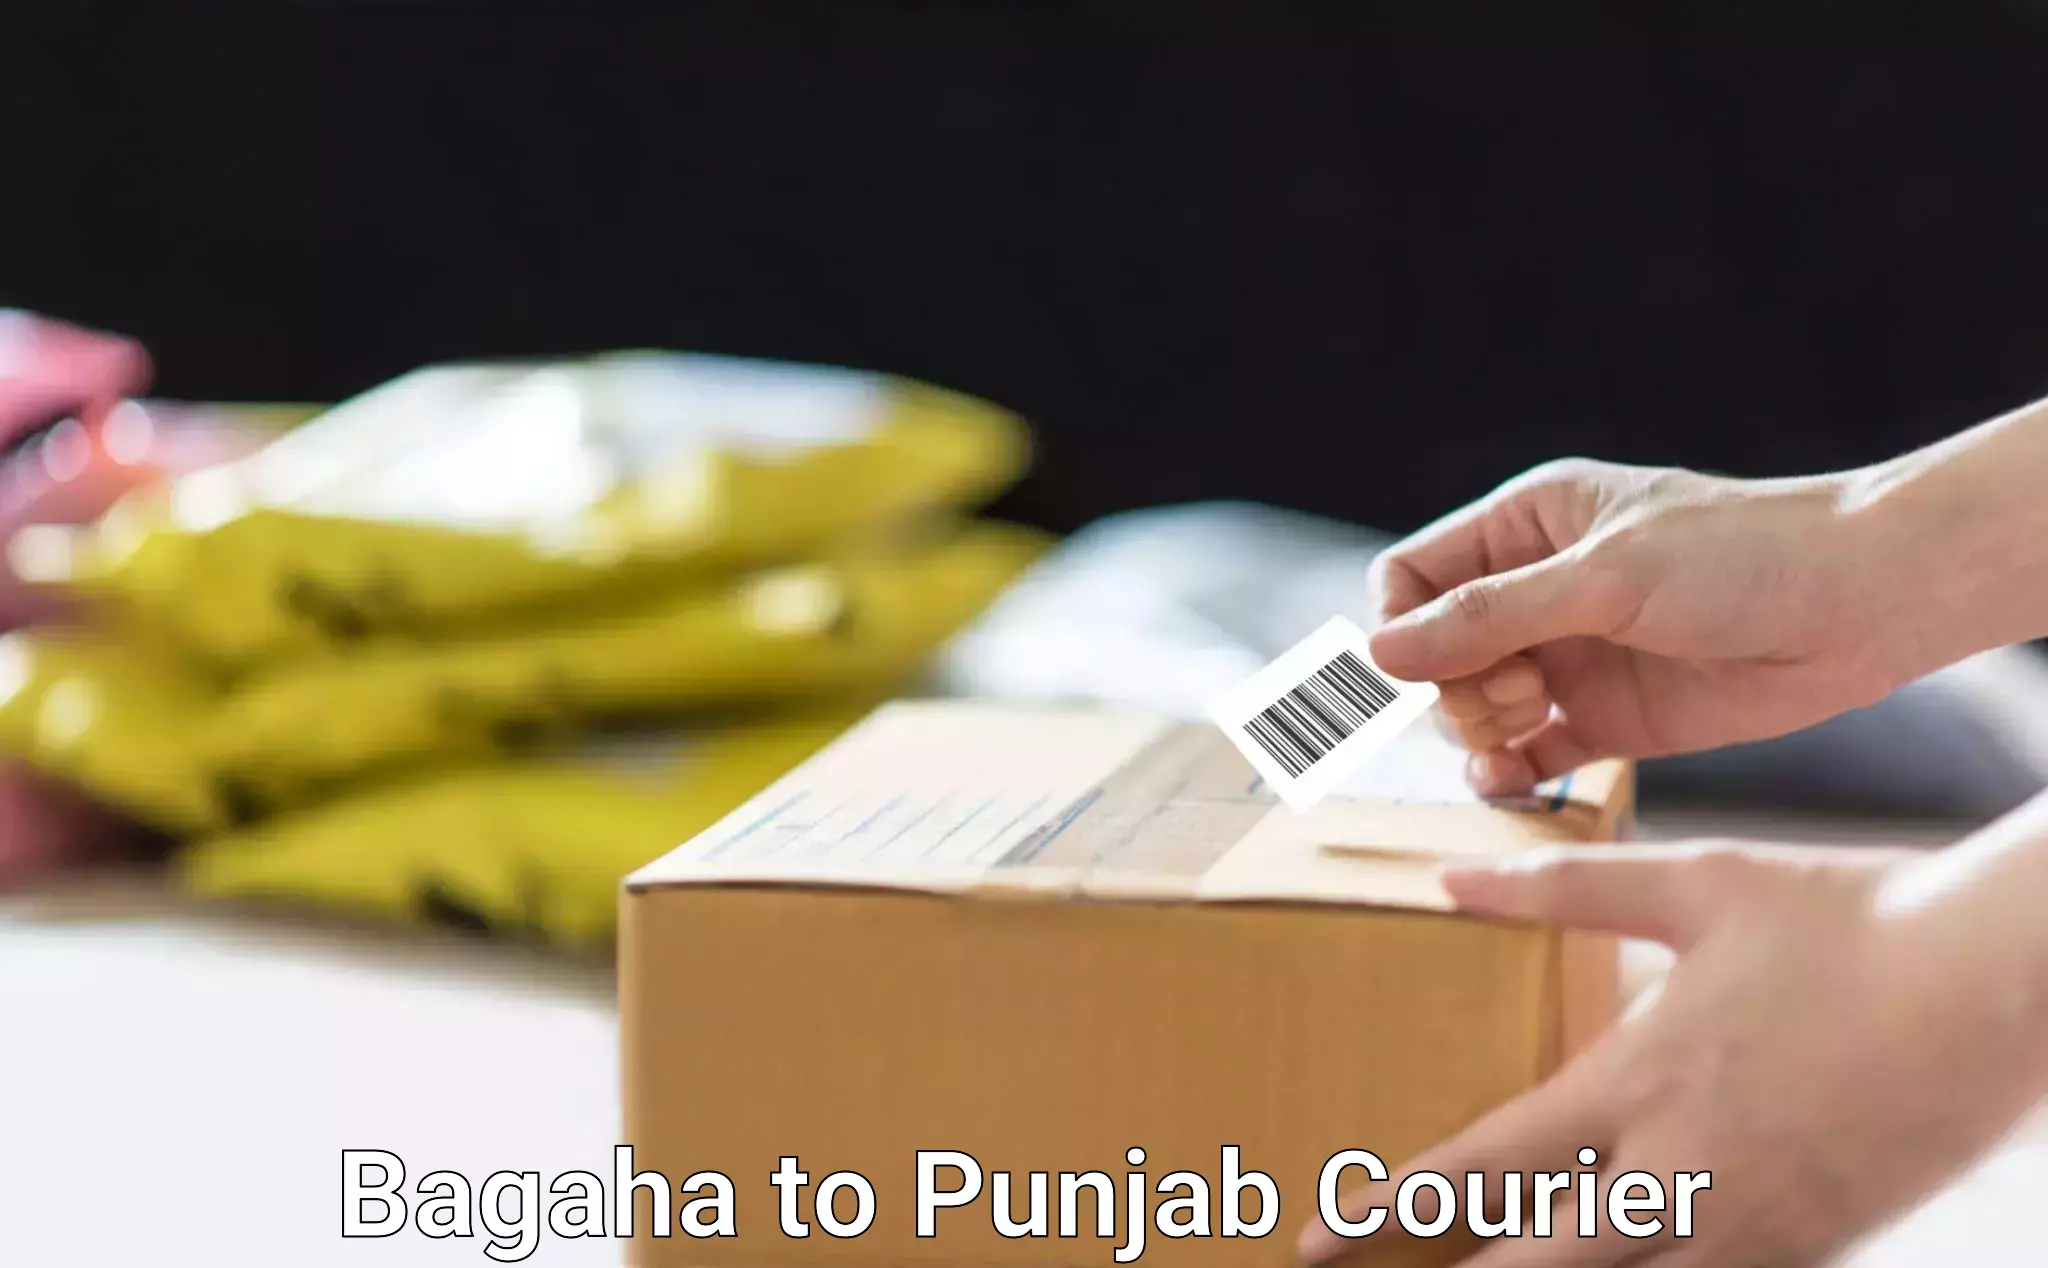 Home shifting experts Bagaha to Punjab